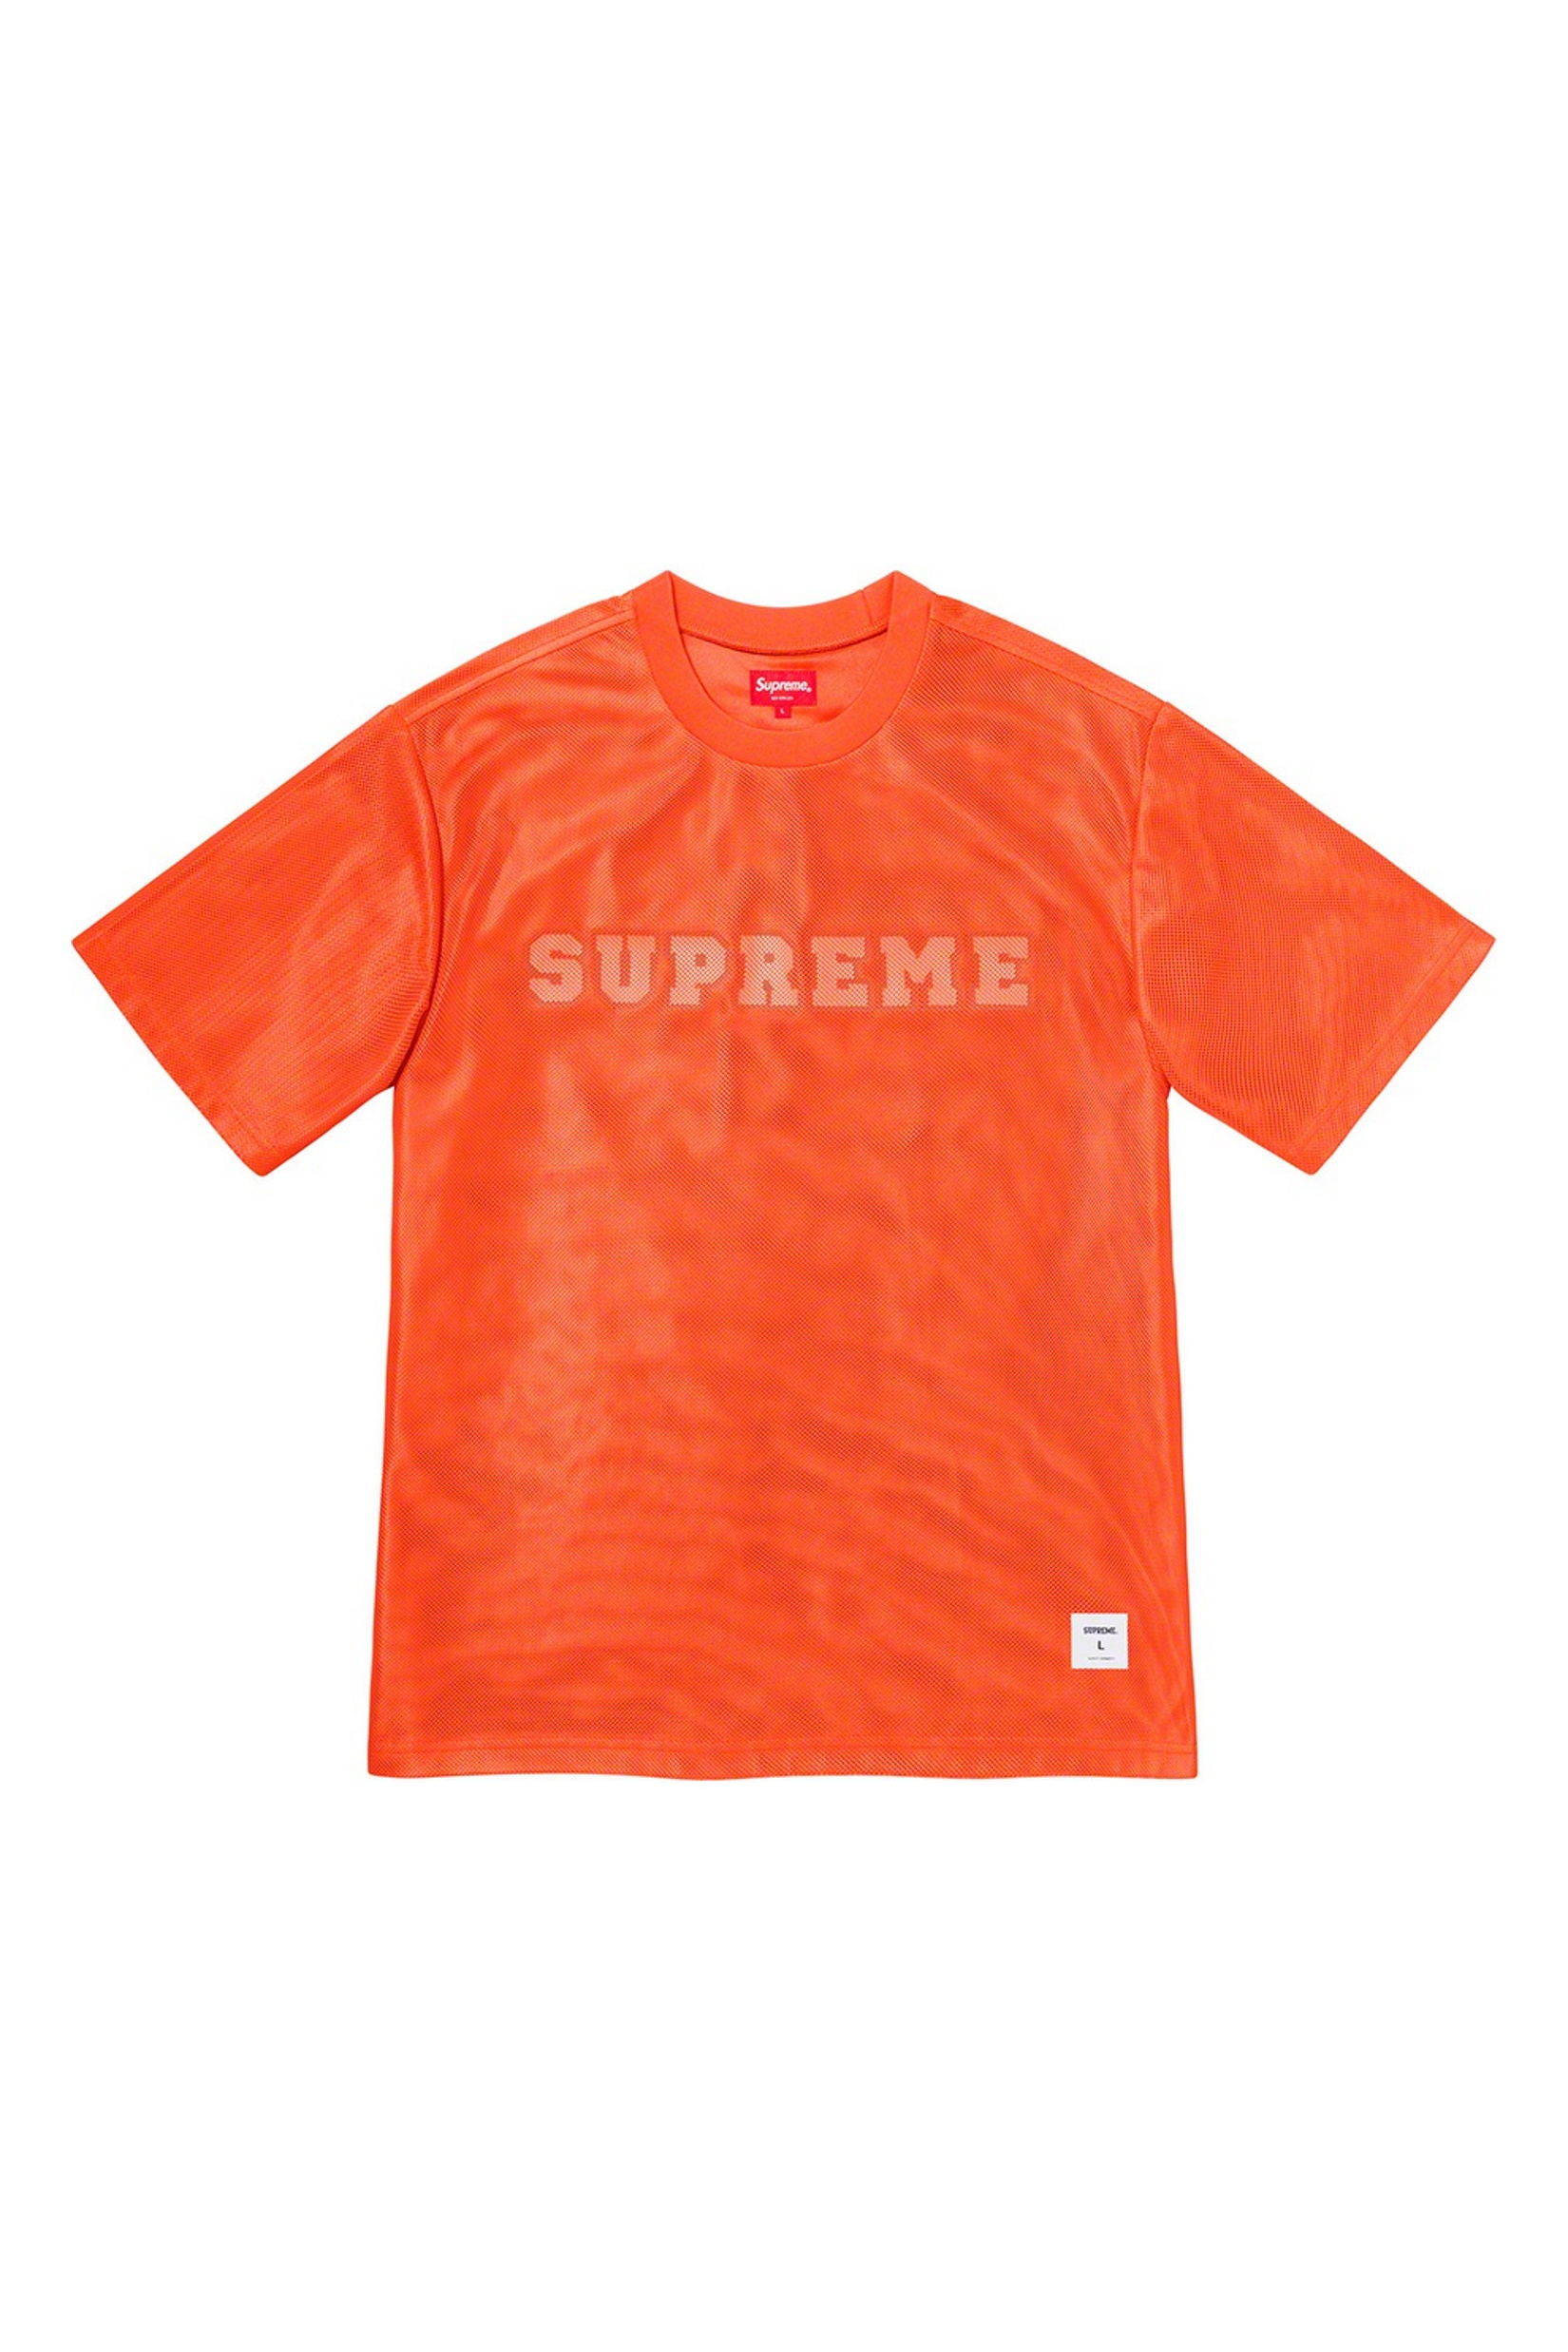 Supreme - Men - Supreme Dazzle Mesh S/S Top Orange - Size Medium | Walmart  Canada